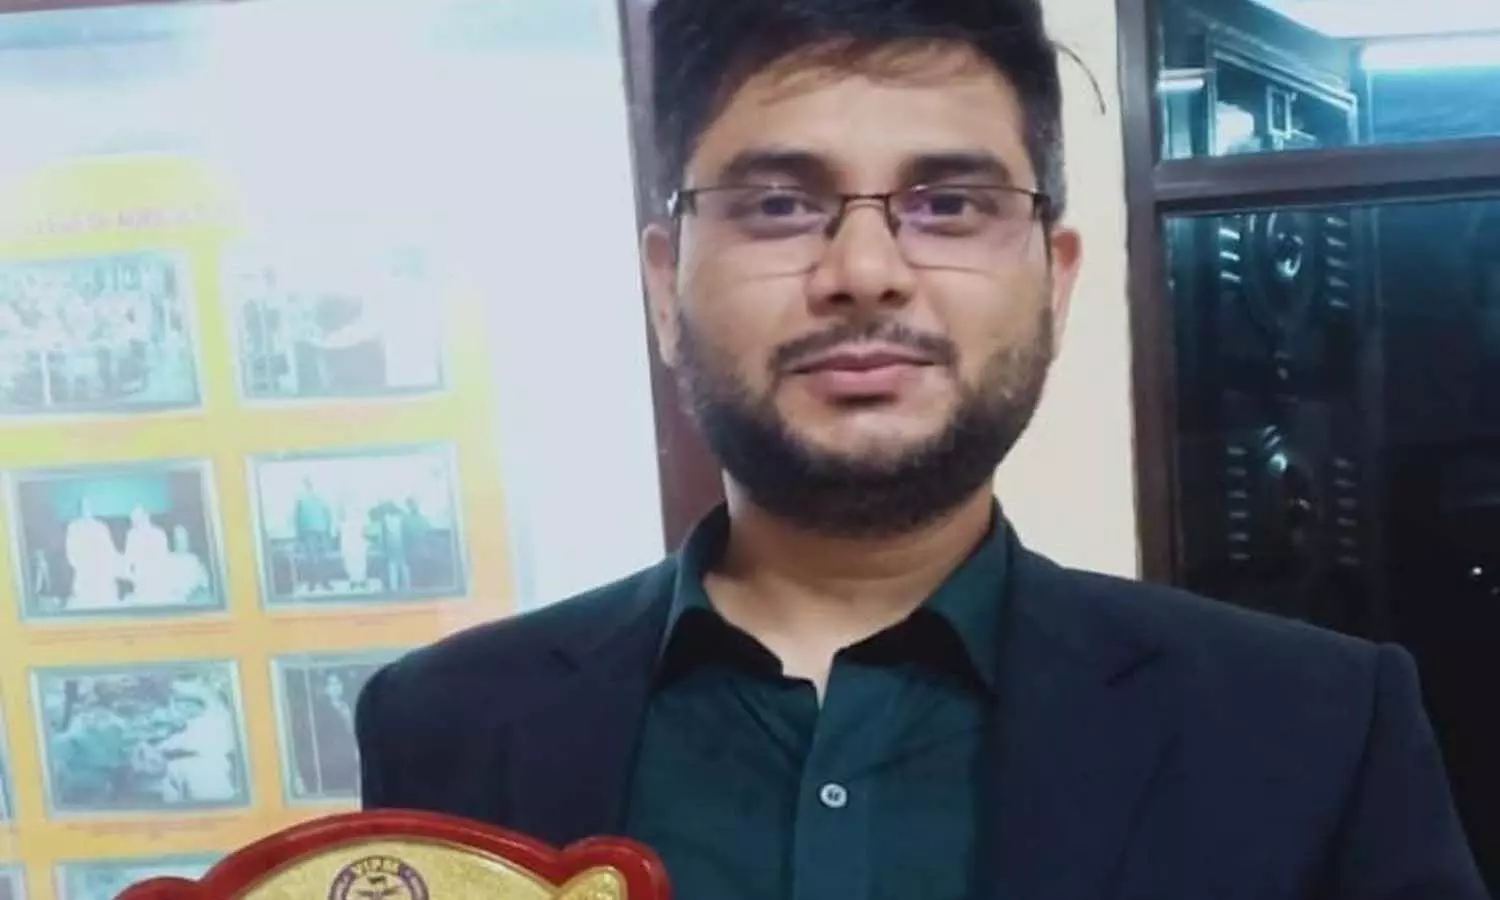 Kapil Gupta of Lakhimpur Kheri got the best PhD thesis award, illuminating the name of the district